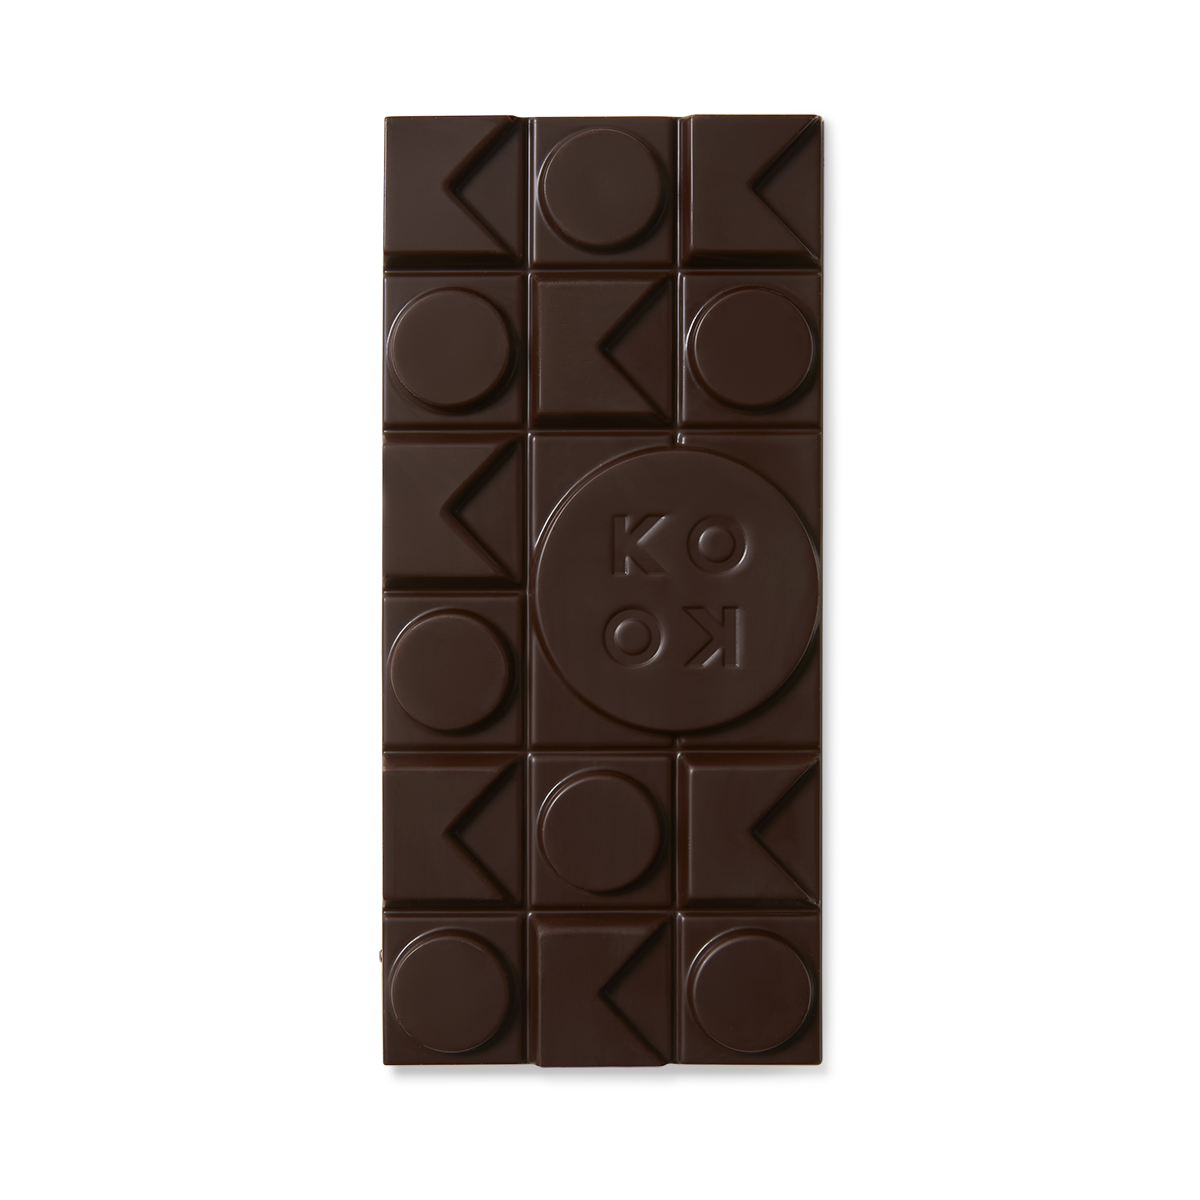 Chocolate block with art deco pieces